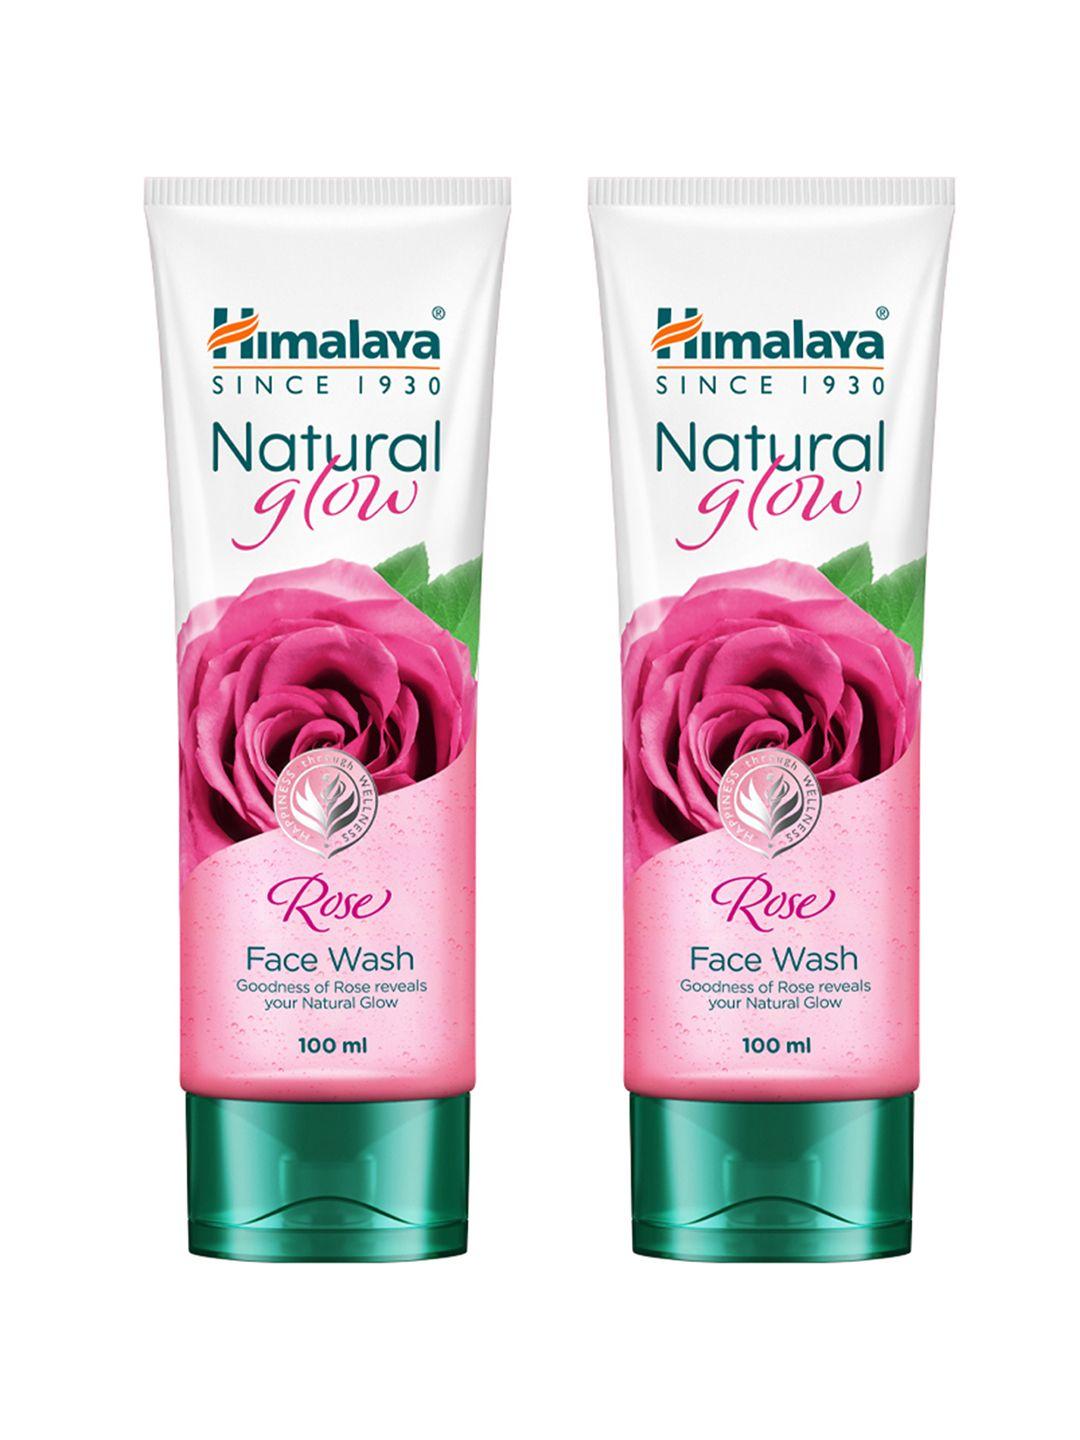 himalaya set of 2 natural glow rose face wash - 100ml each